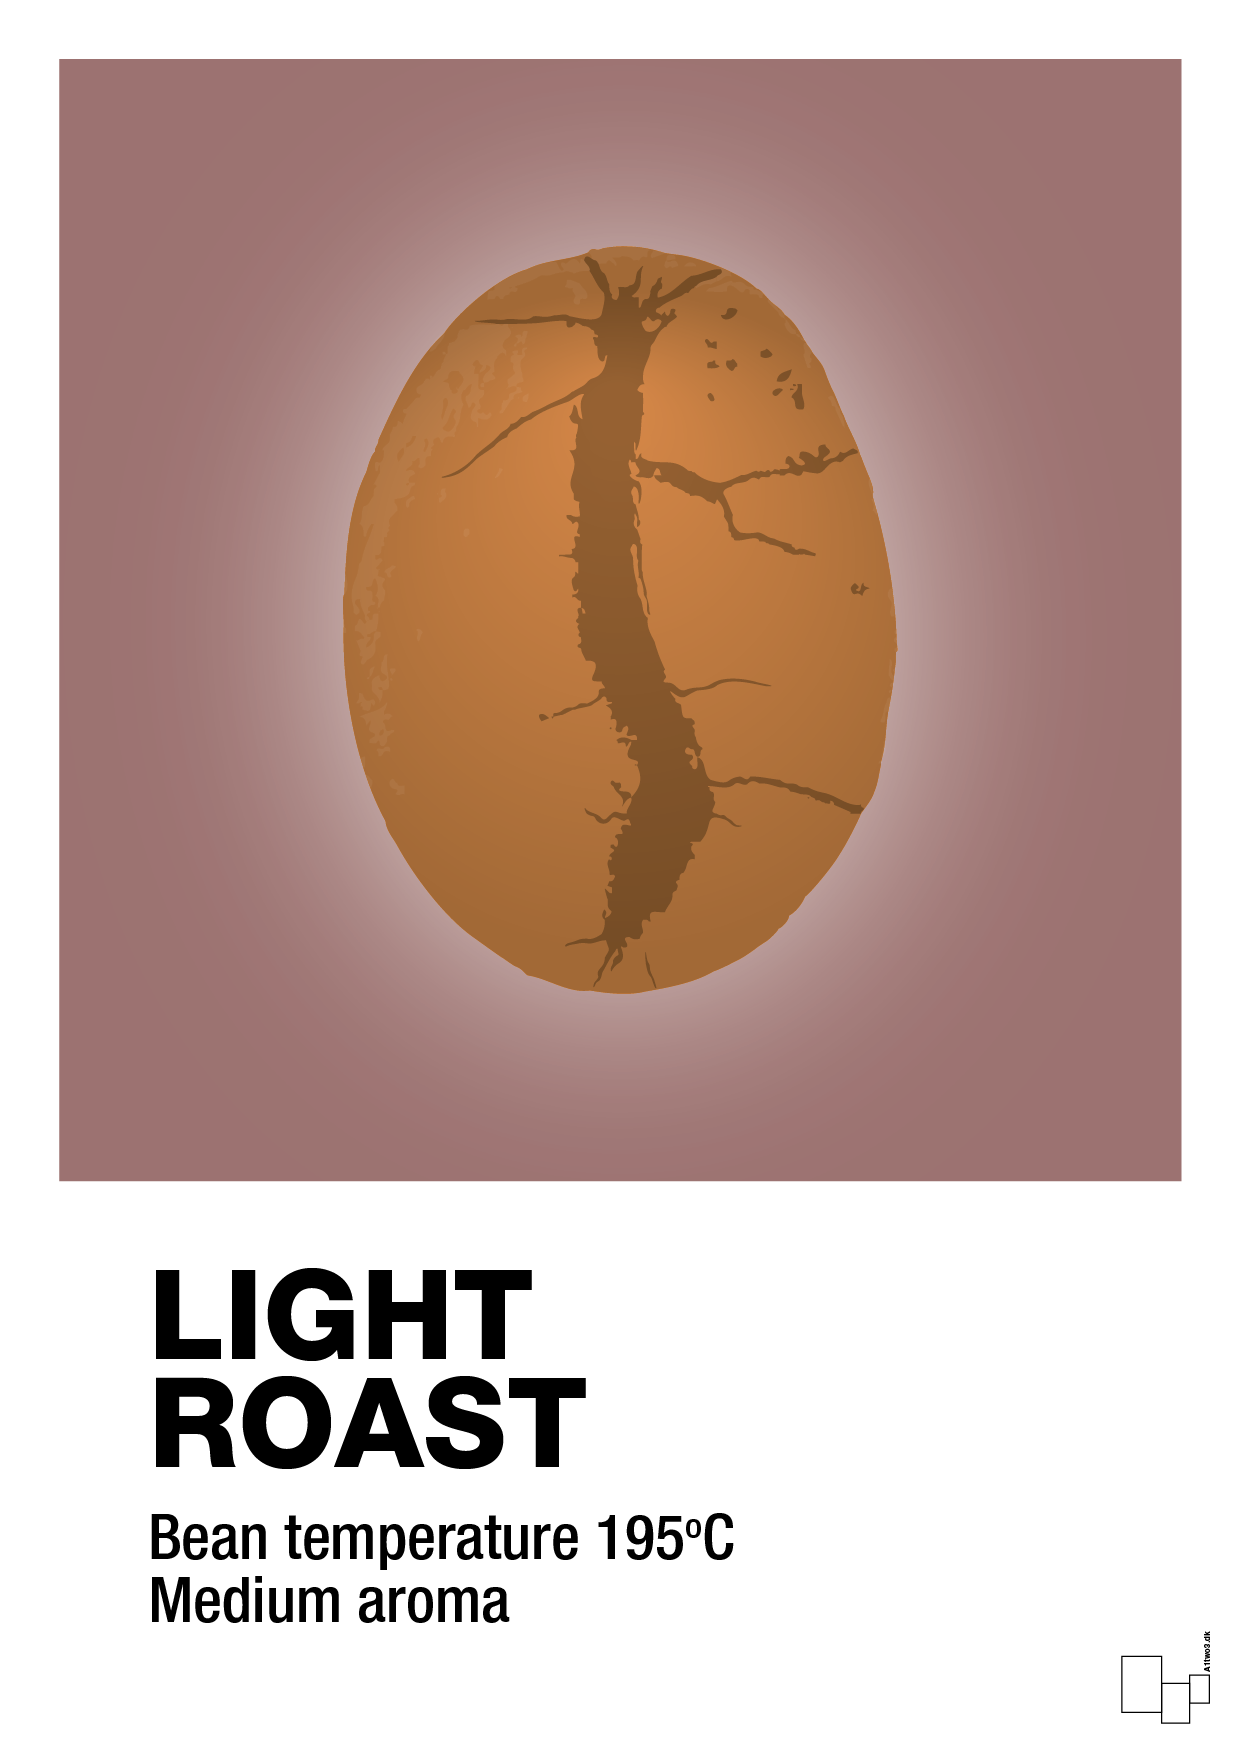 light roast - Plakat med Mad & Drikke i Plum